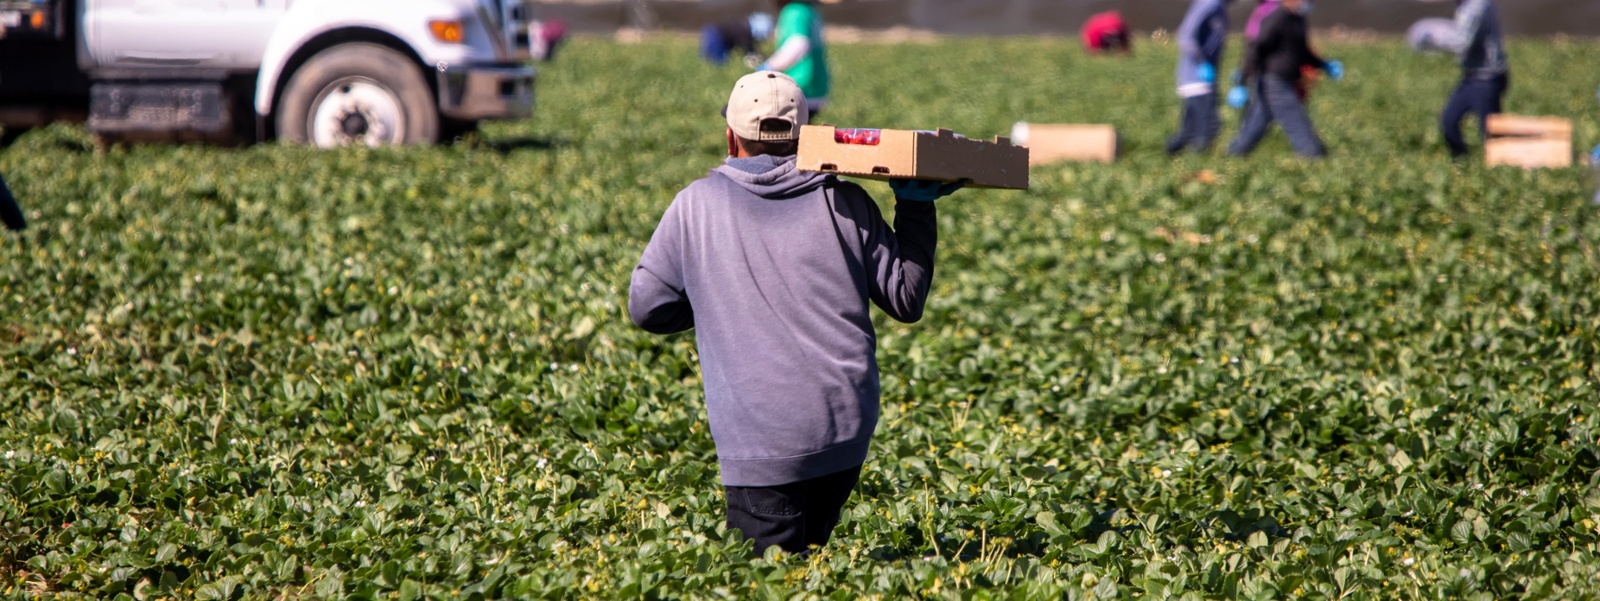 Farm labor bills in Congress face a tough path to passage